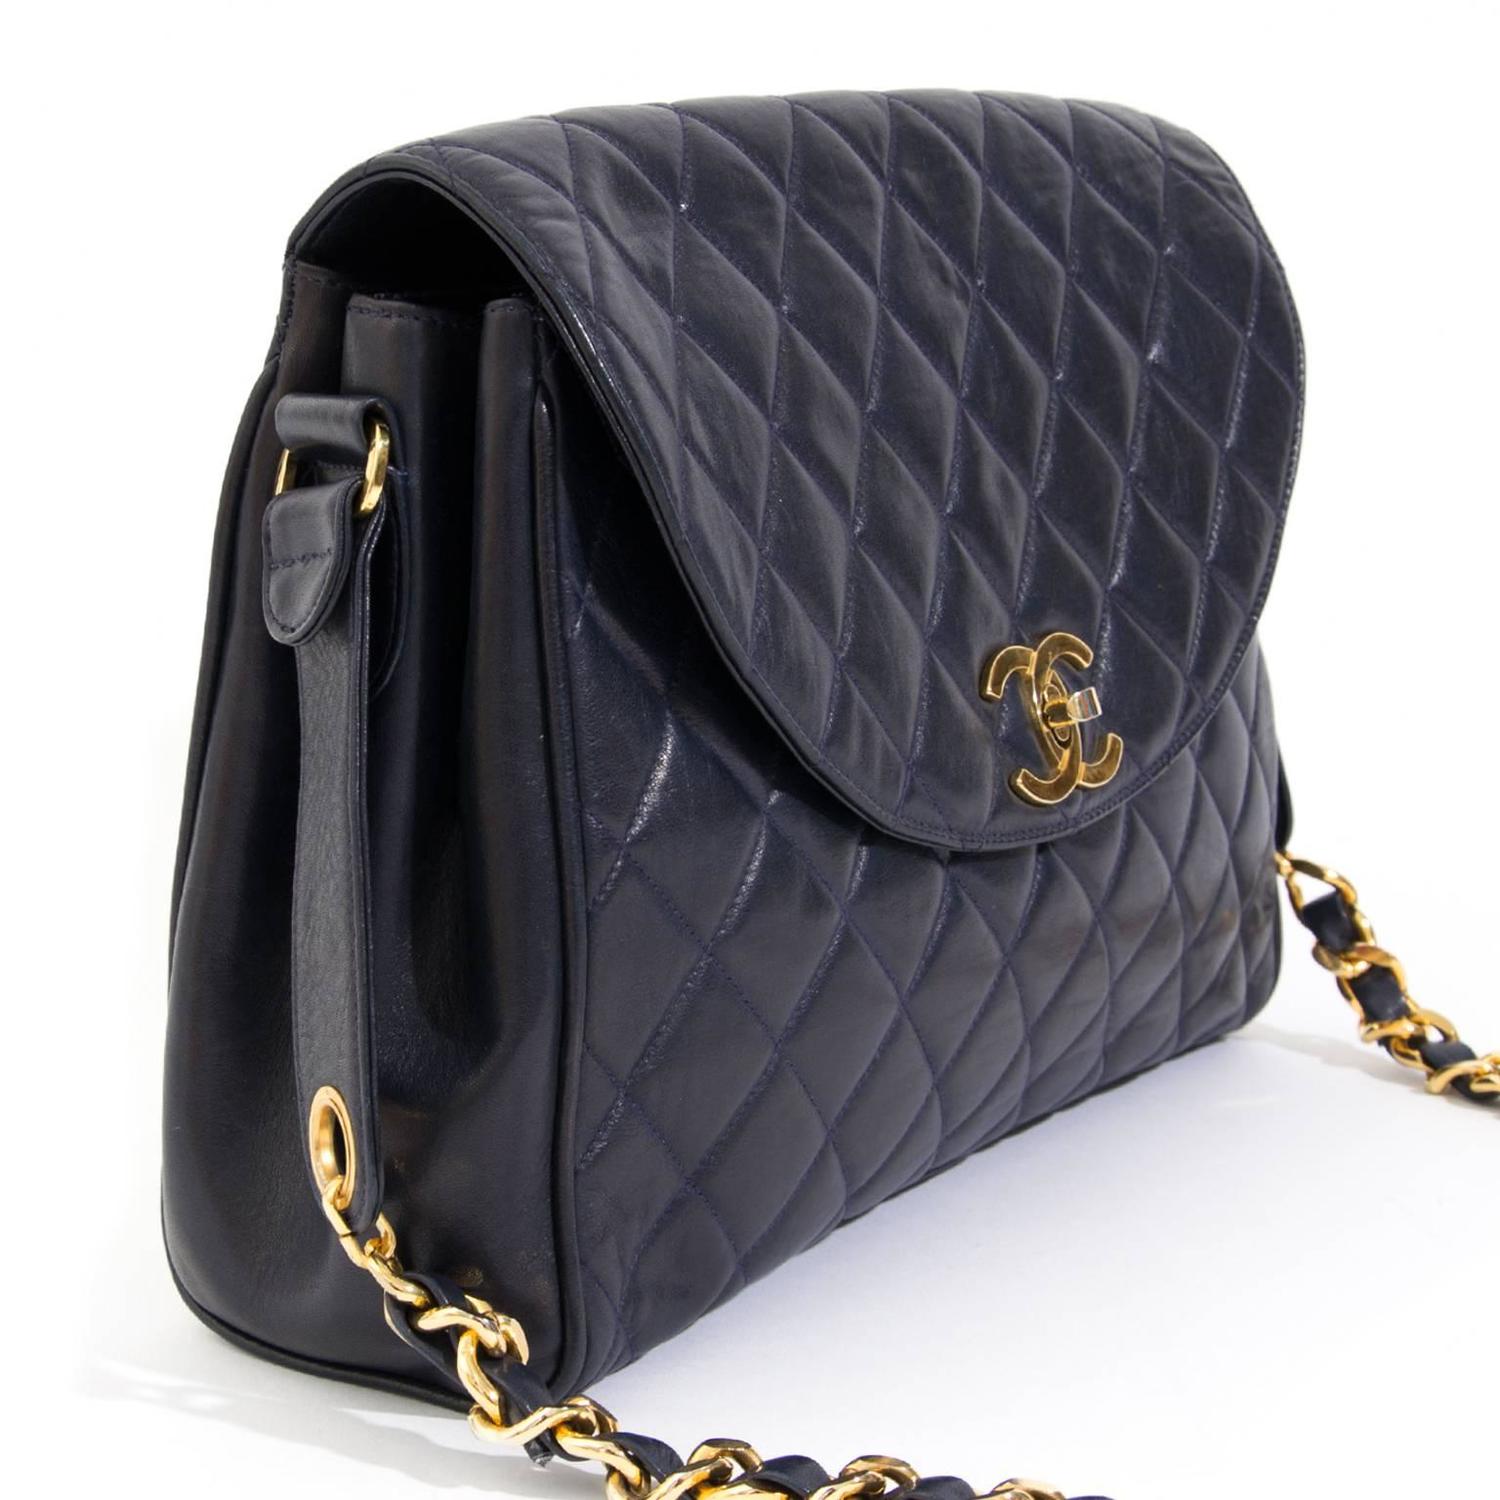 Chanel Vintage Flap Bag Golden Chain at 1stdibs